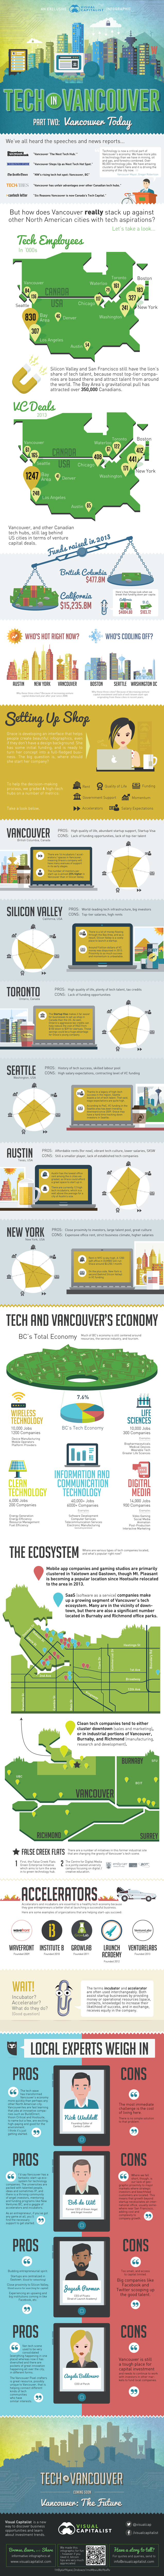 Is Vancouver a Legitimate Tech Hub?